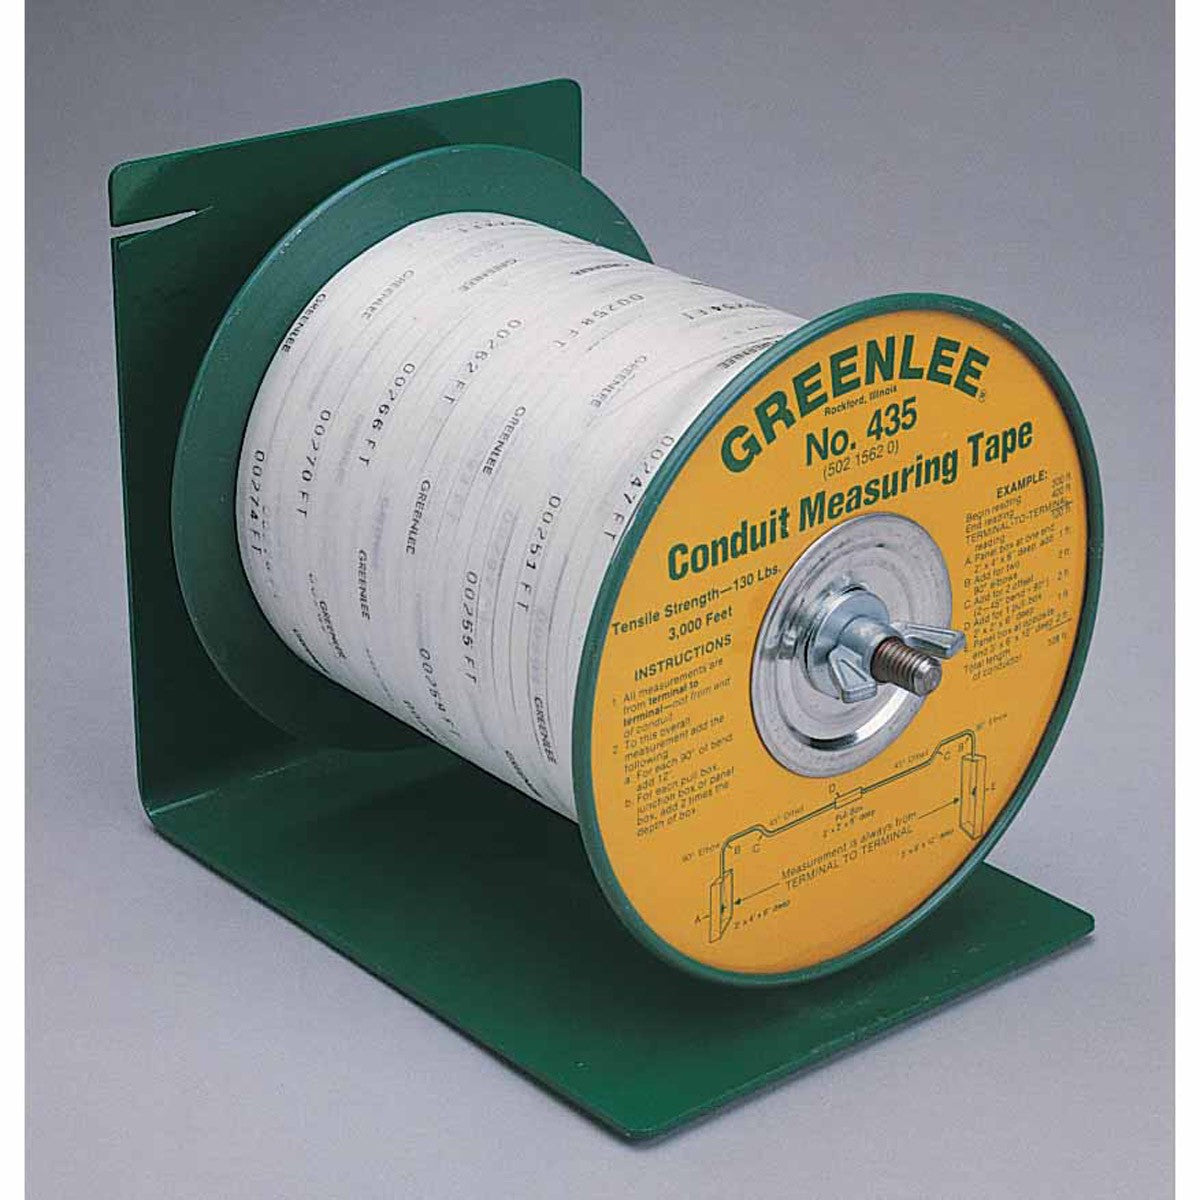 Greenlee 435 Conduit Measuring Tape 3000 ft x 3/16"